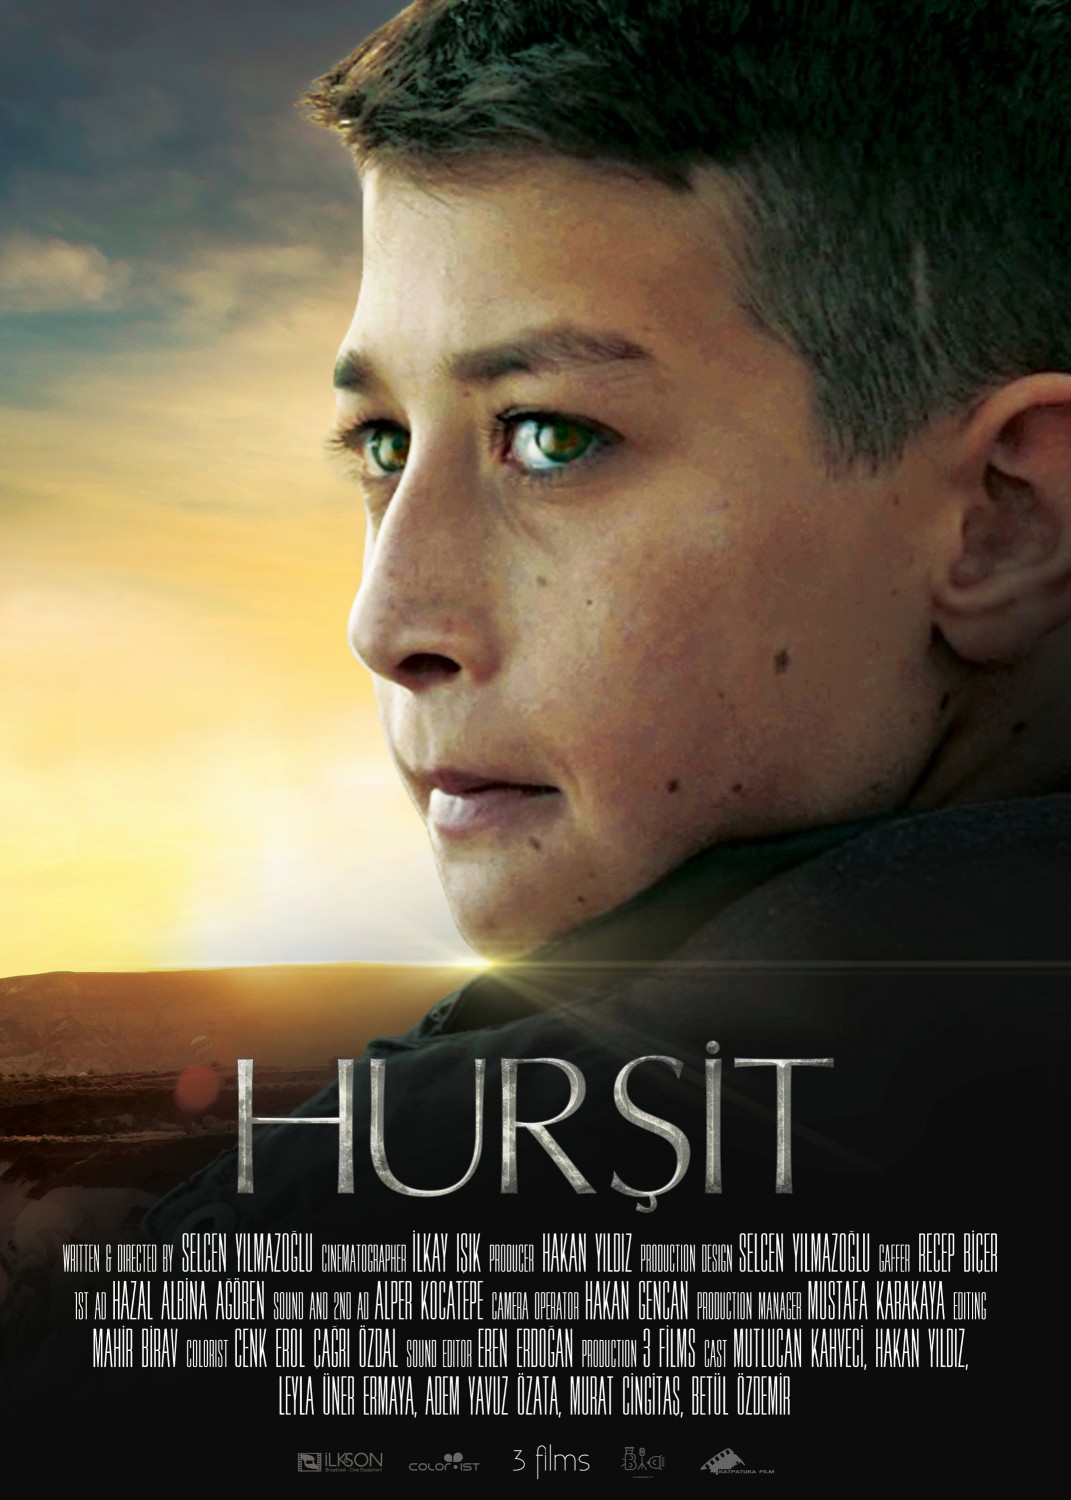 Extra Large Movie Poster Image for Hursit